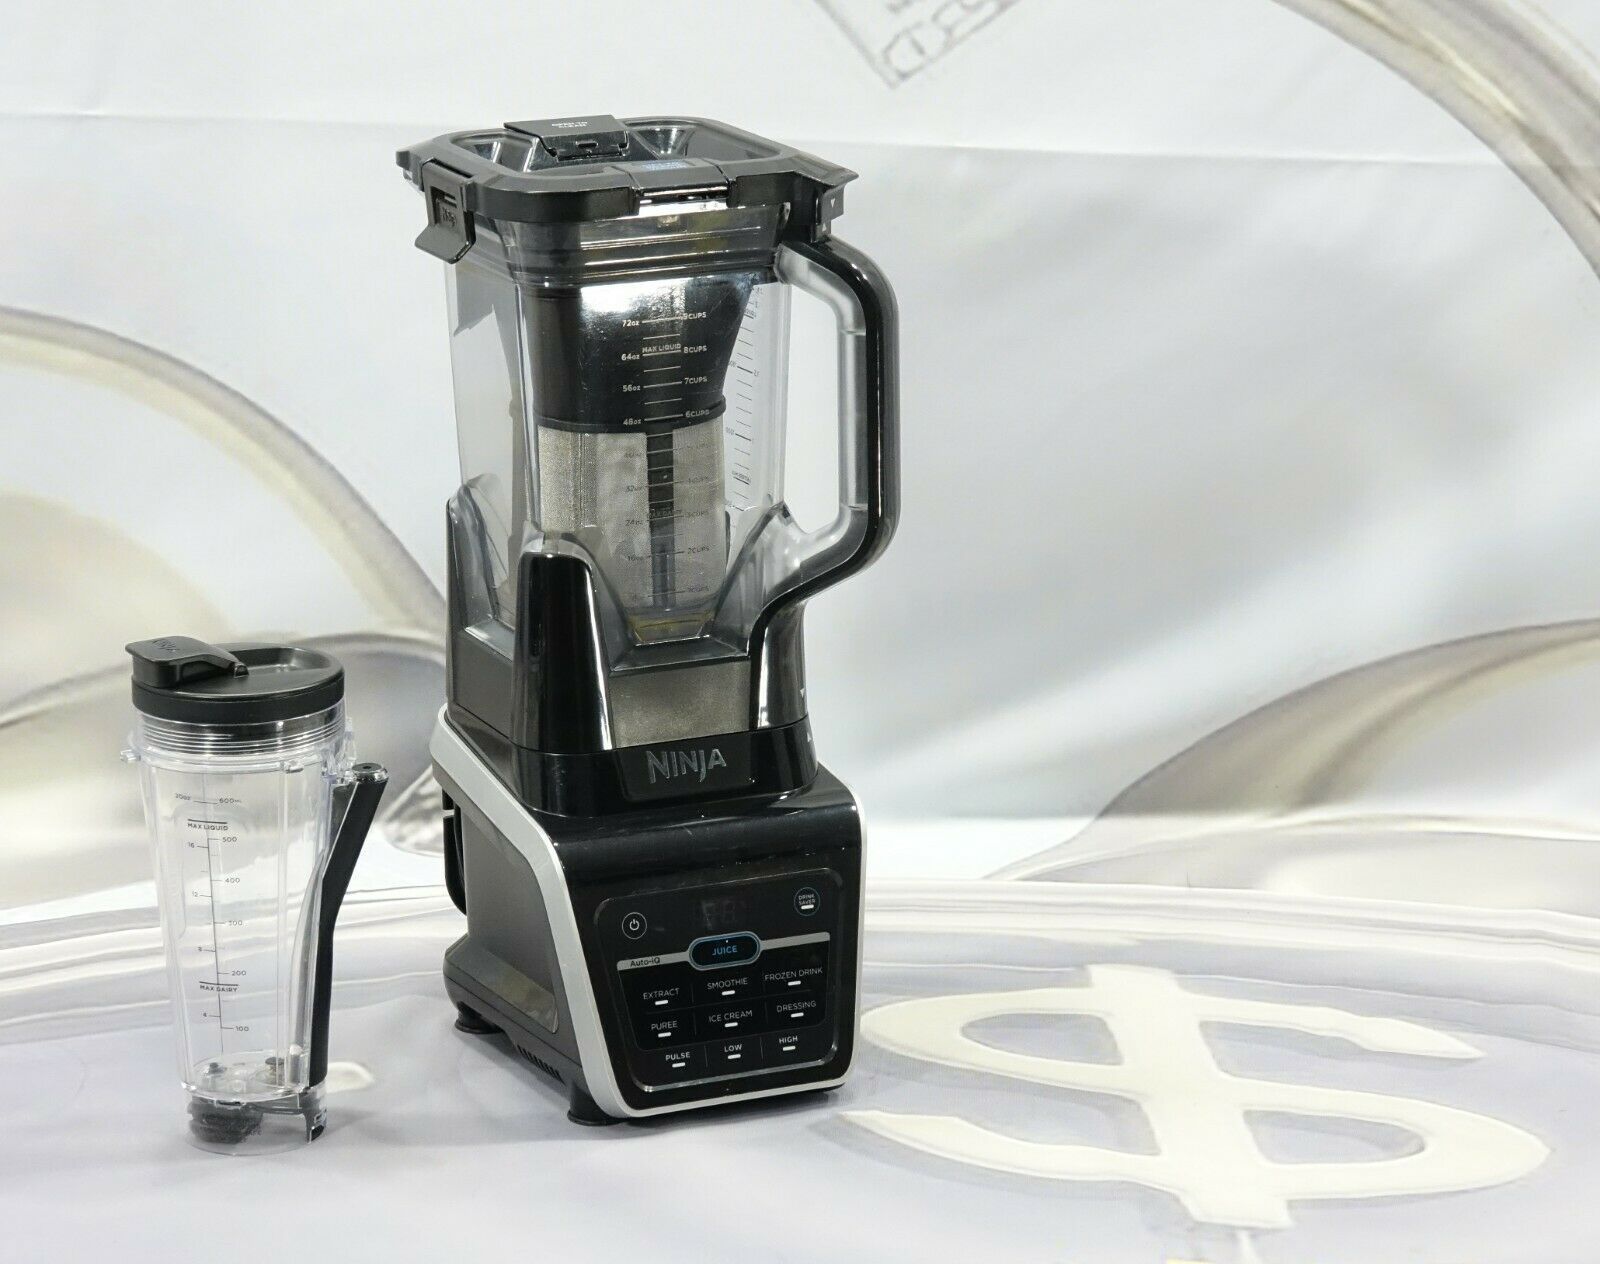 NEW 2020 Ninja Professional Food Processor with Auto IQ - 9 cup - Full DEMO  